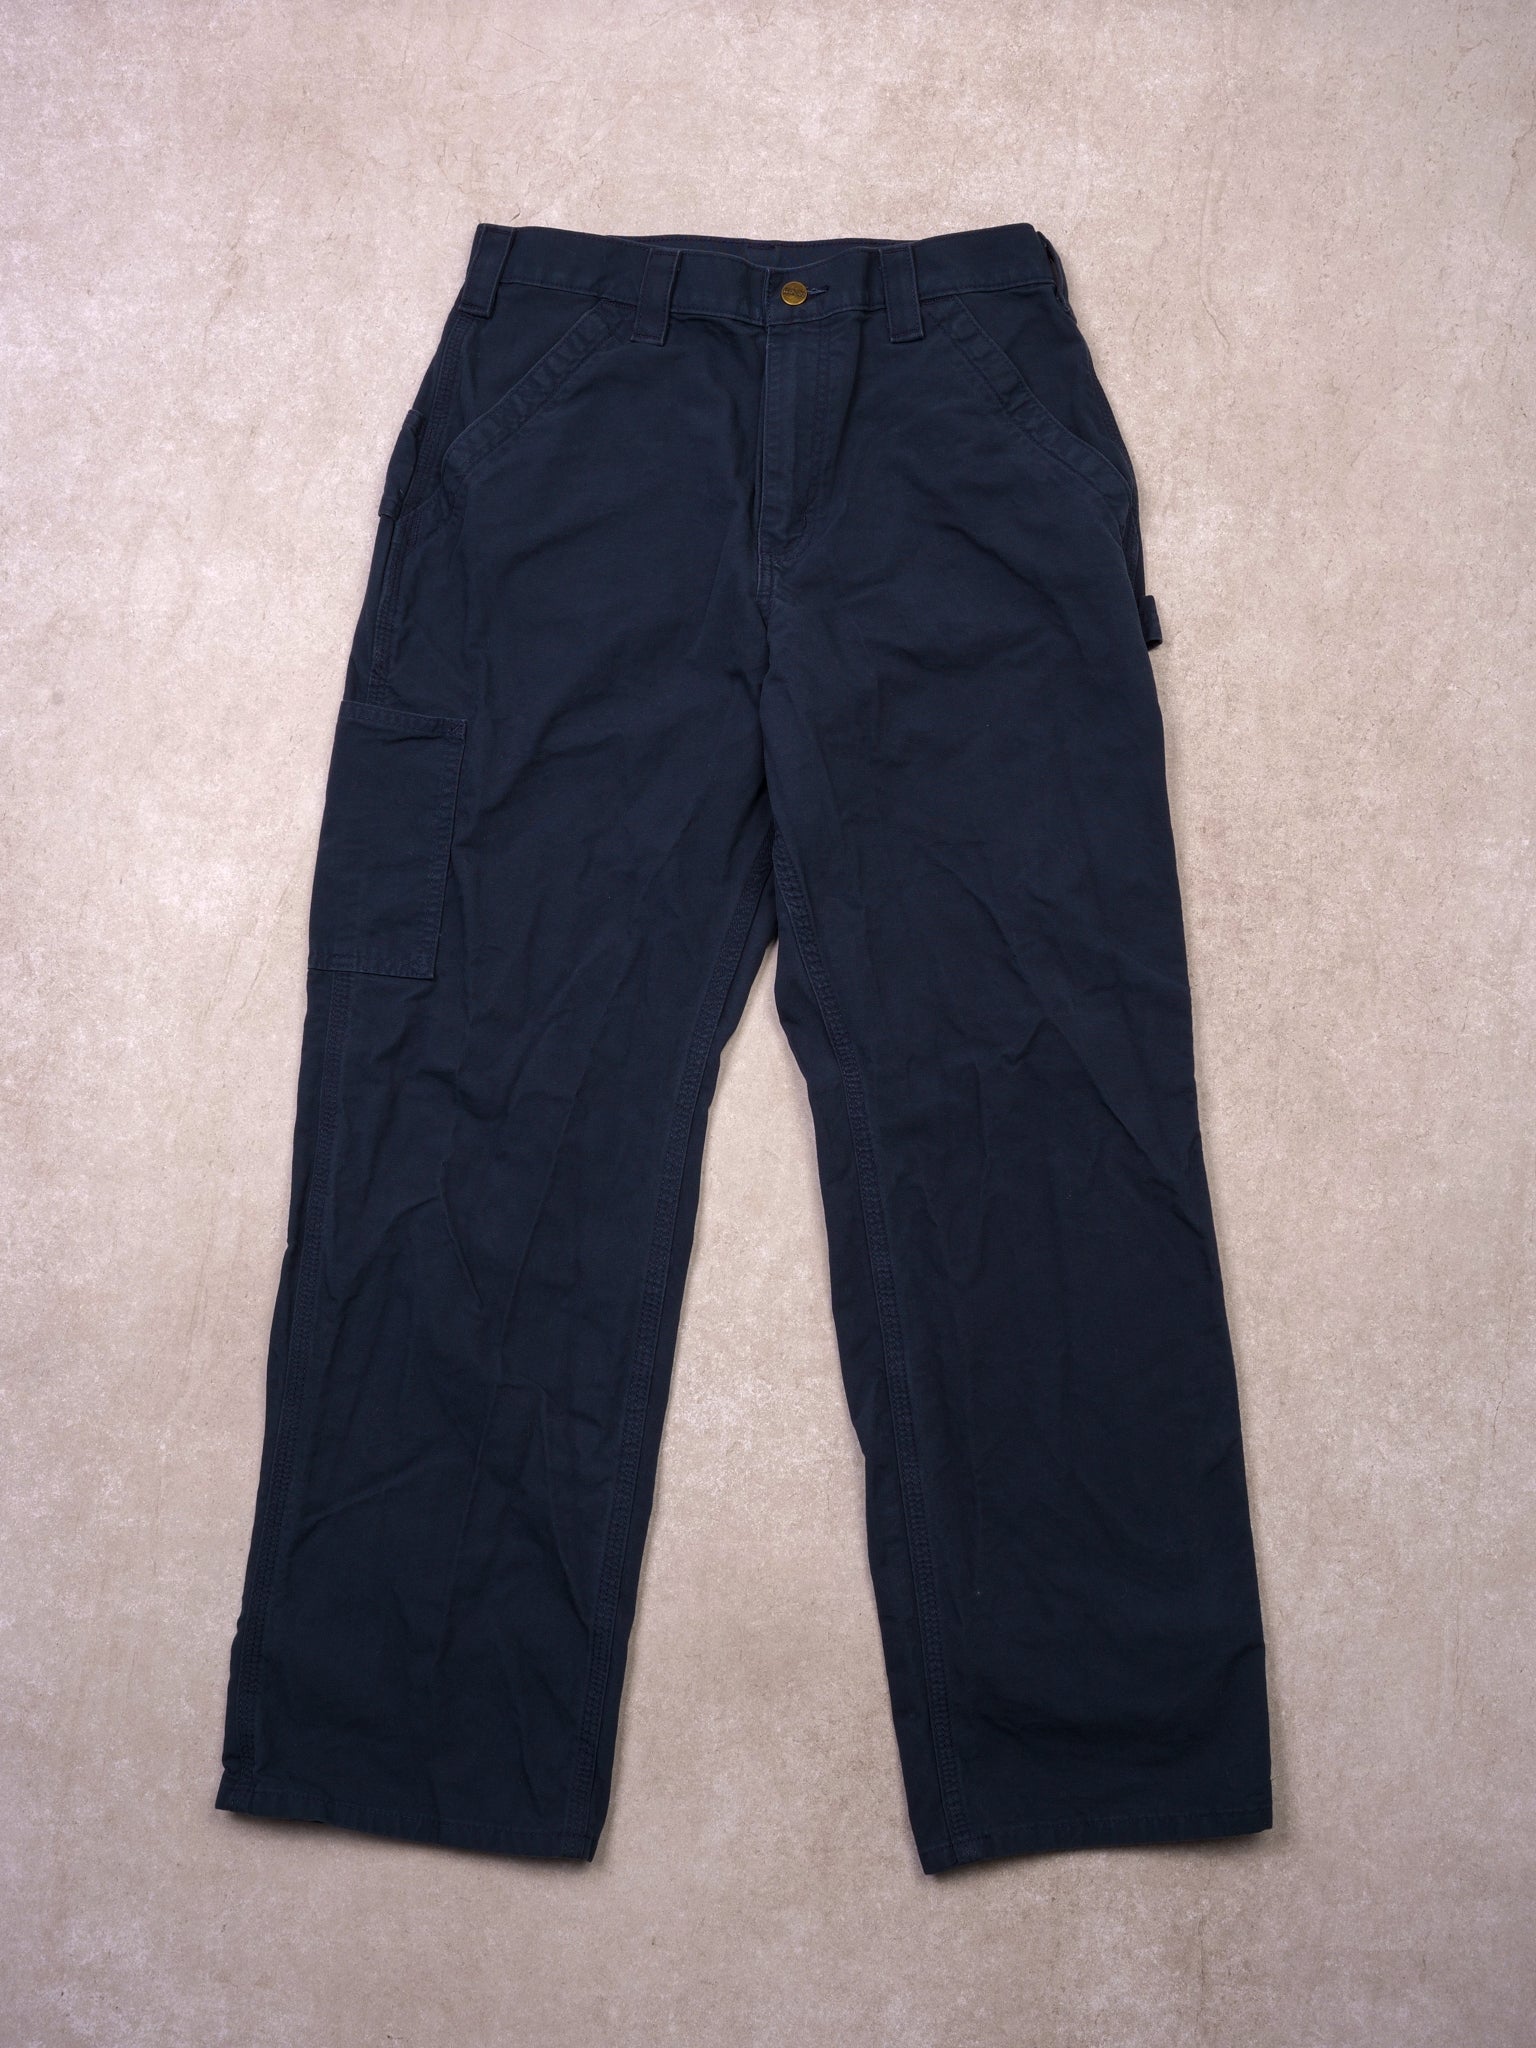 Vintage 90s Dark Blue Carhartt Loose Original Fit Carpenter Pants (30x30)